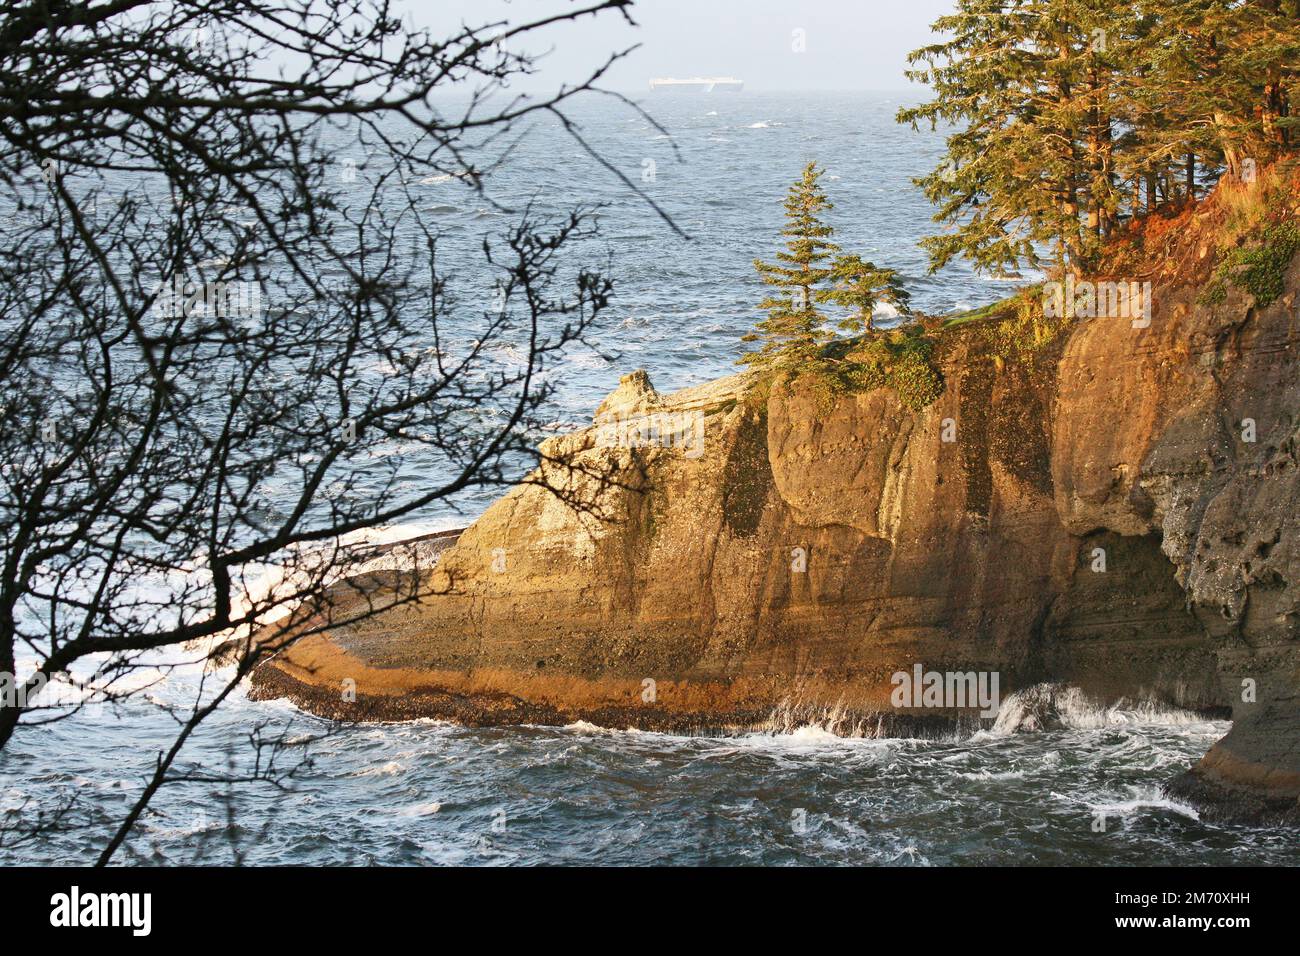 Washington pacific coast hi-res stock photography and images - Alamy